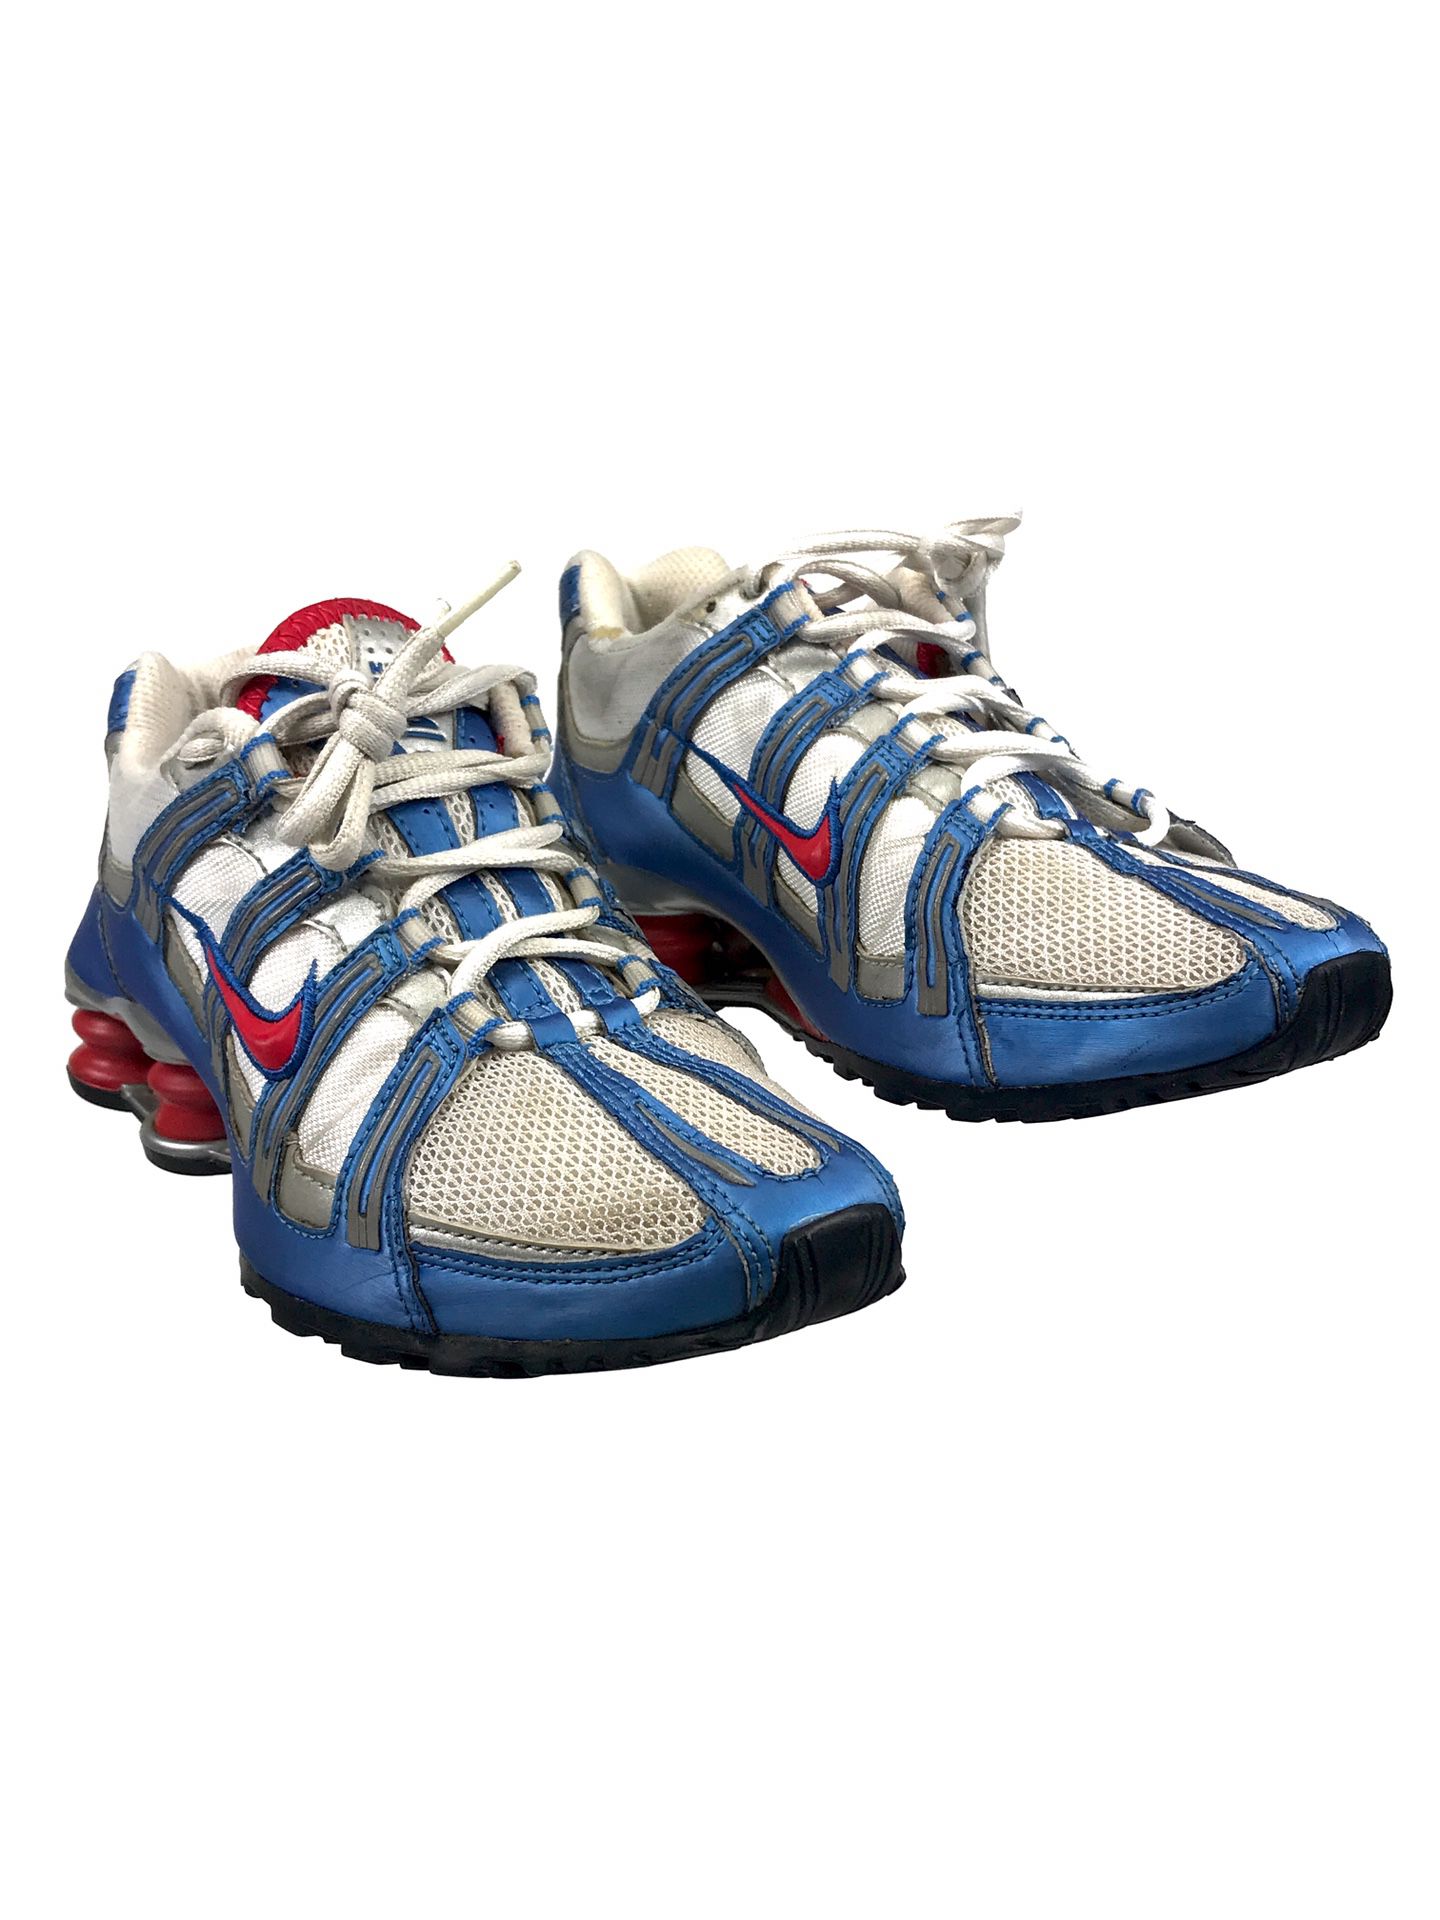 Nike Shox White|BluelRed Sz. 6.5 Shoes